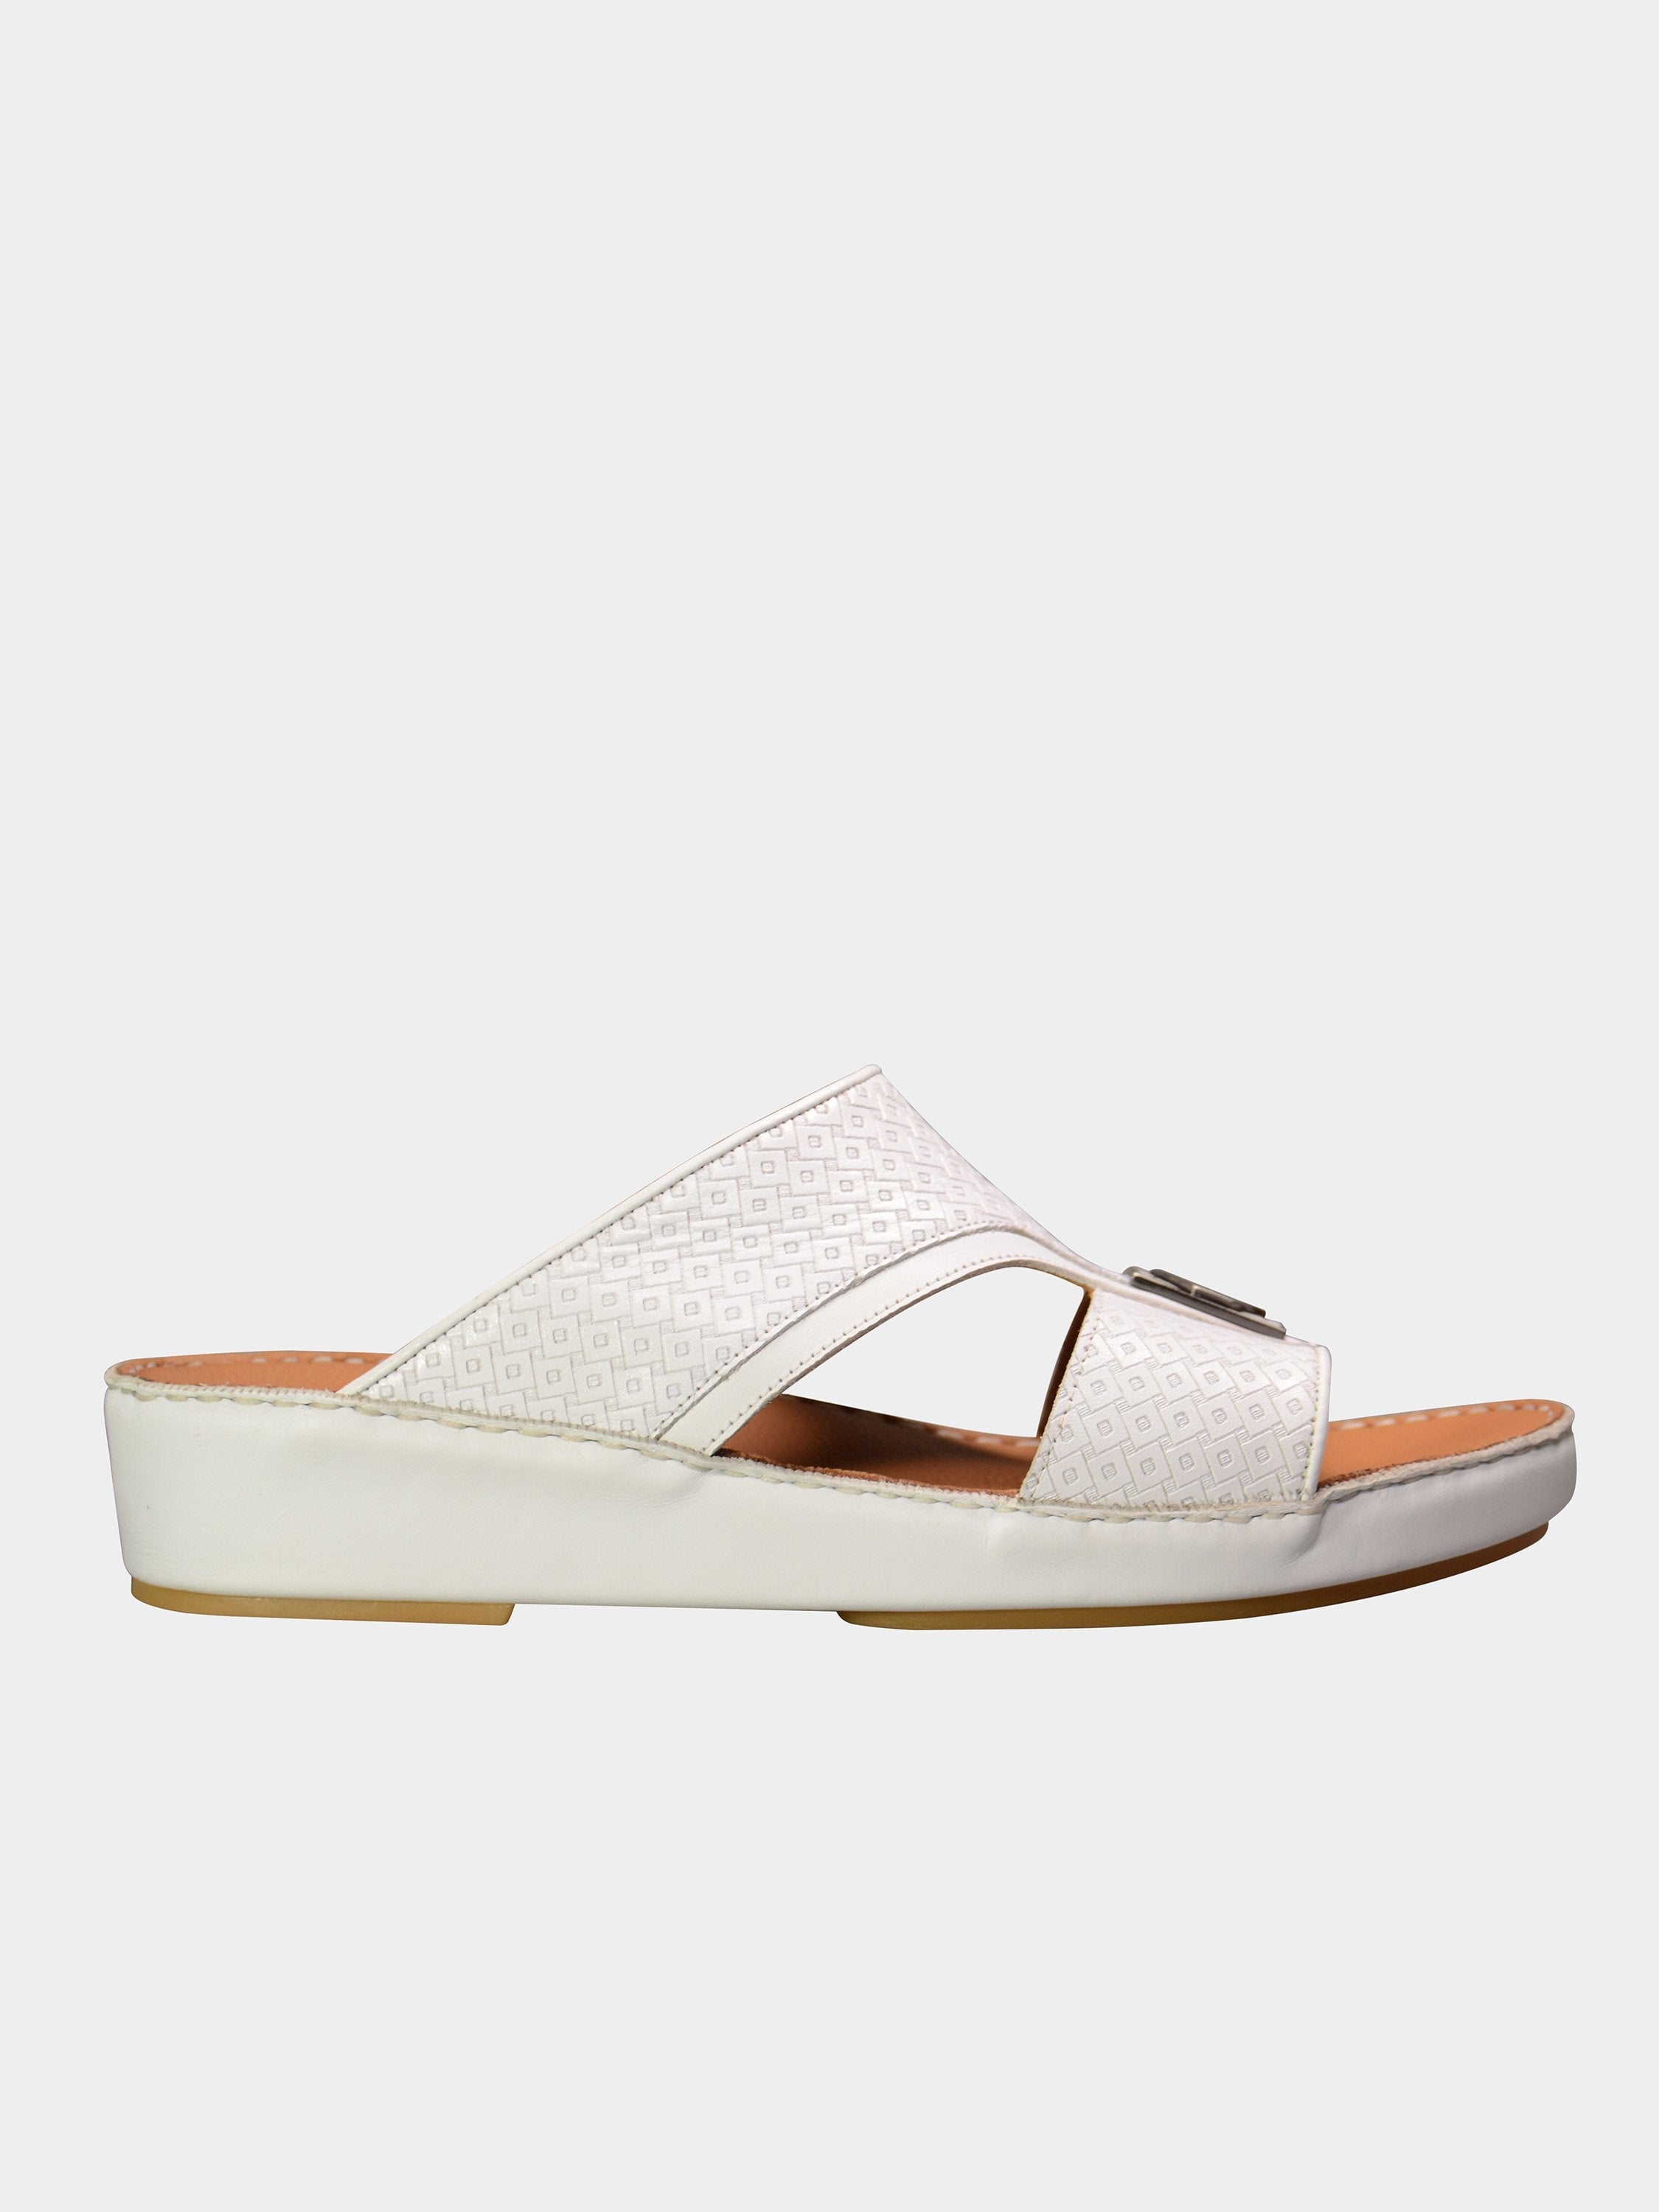 Barjeel Uno 001928 Square Textured Arabic Leather Sandals #color_White